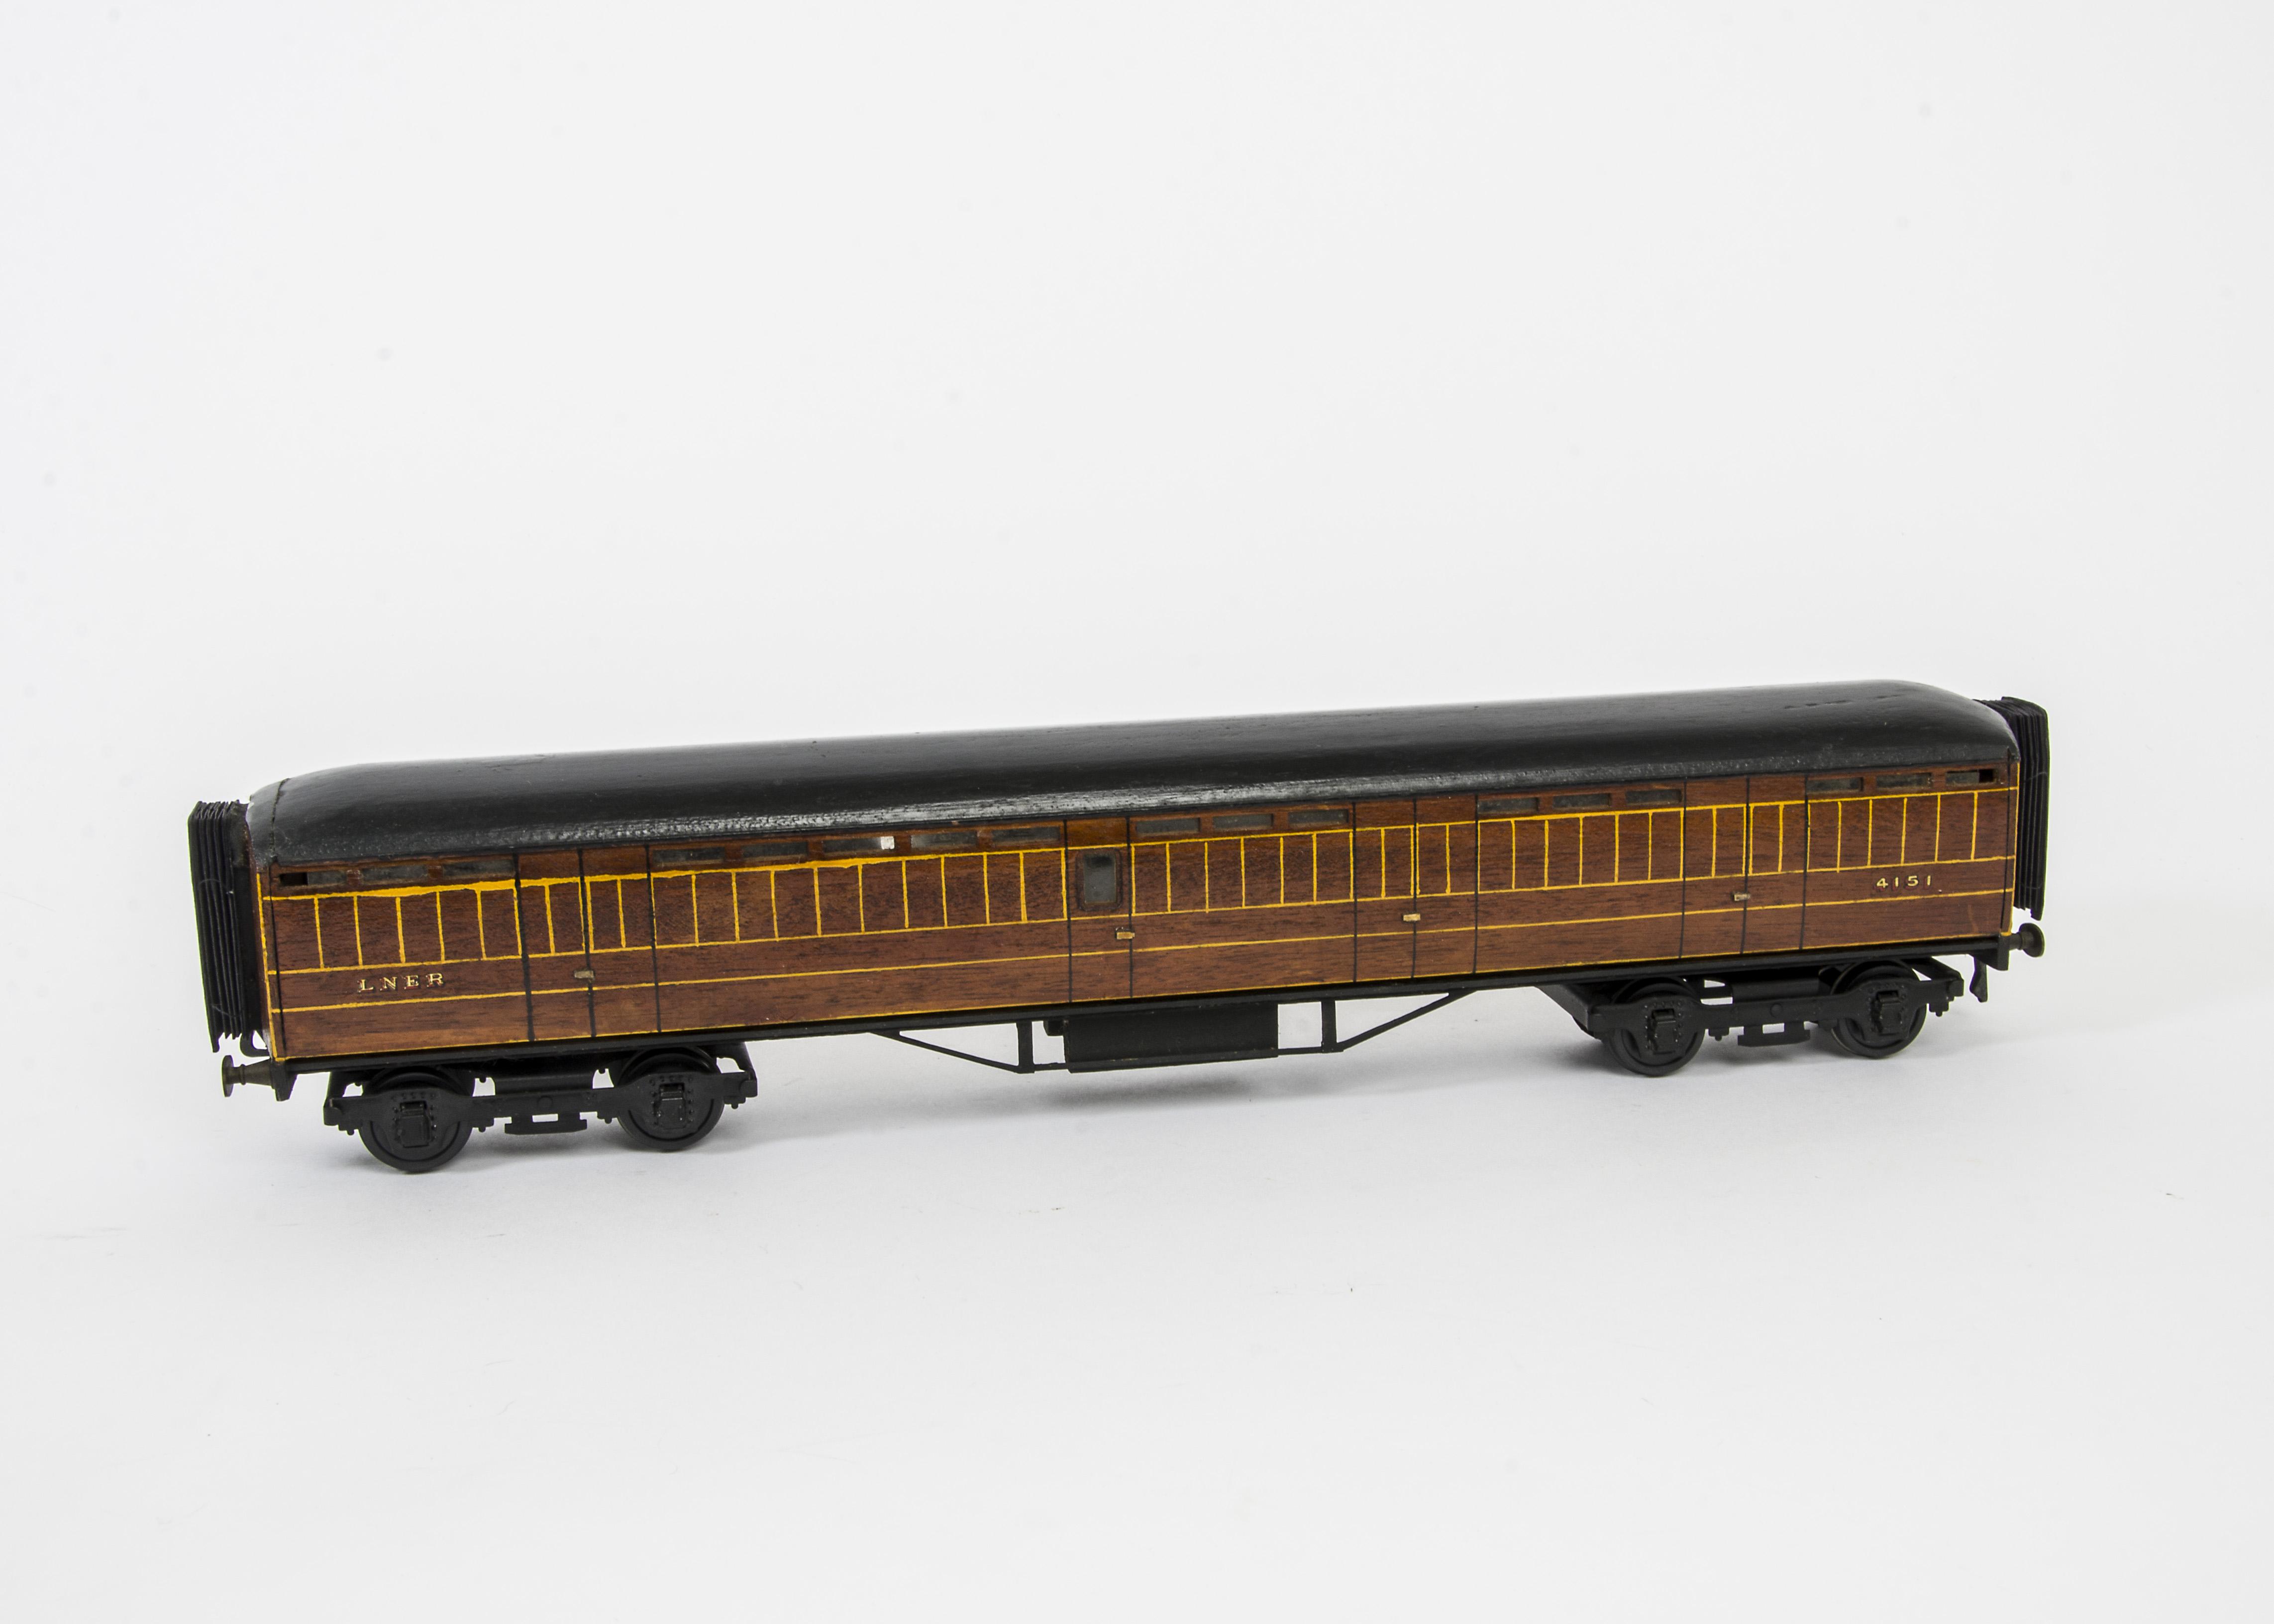 A Finescale Kit-built O Gauge LNER Teak Full Brake Coach, of real teak construction, possibly from